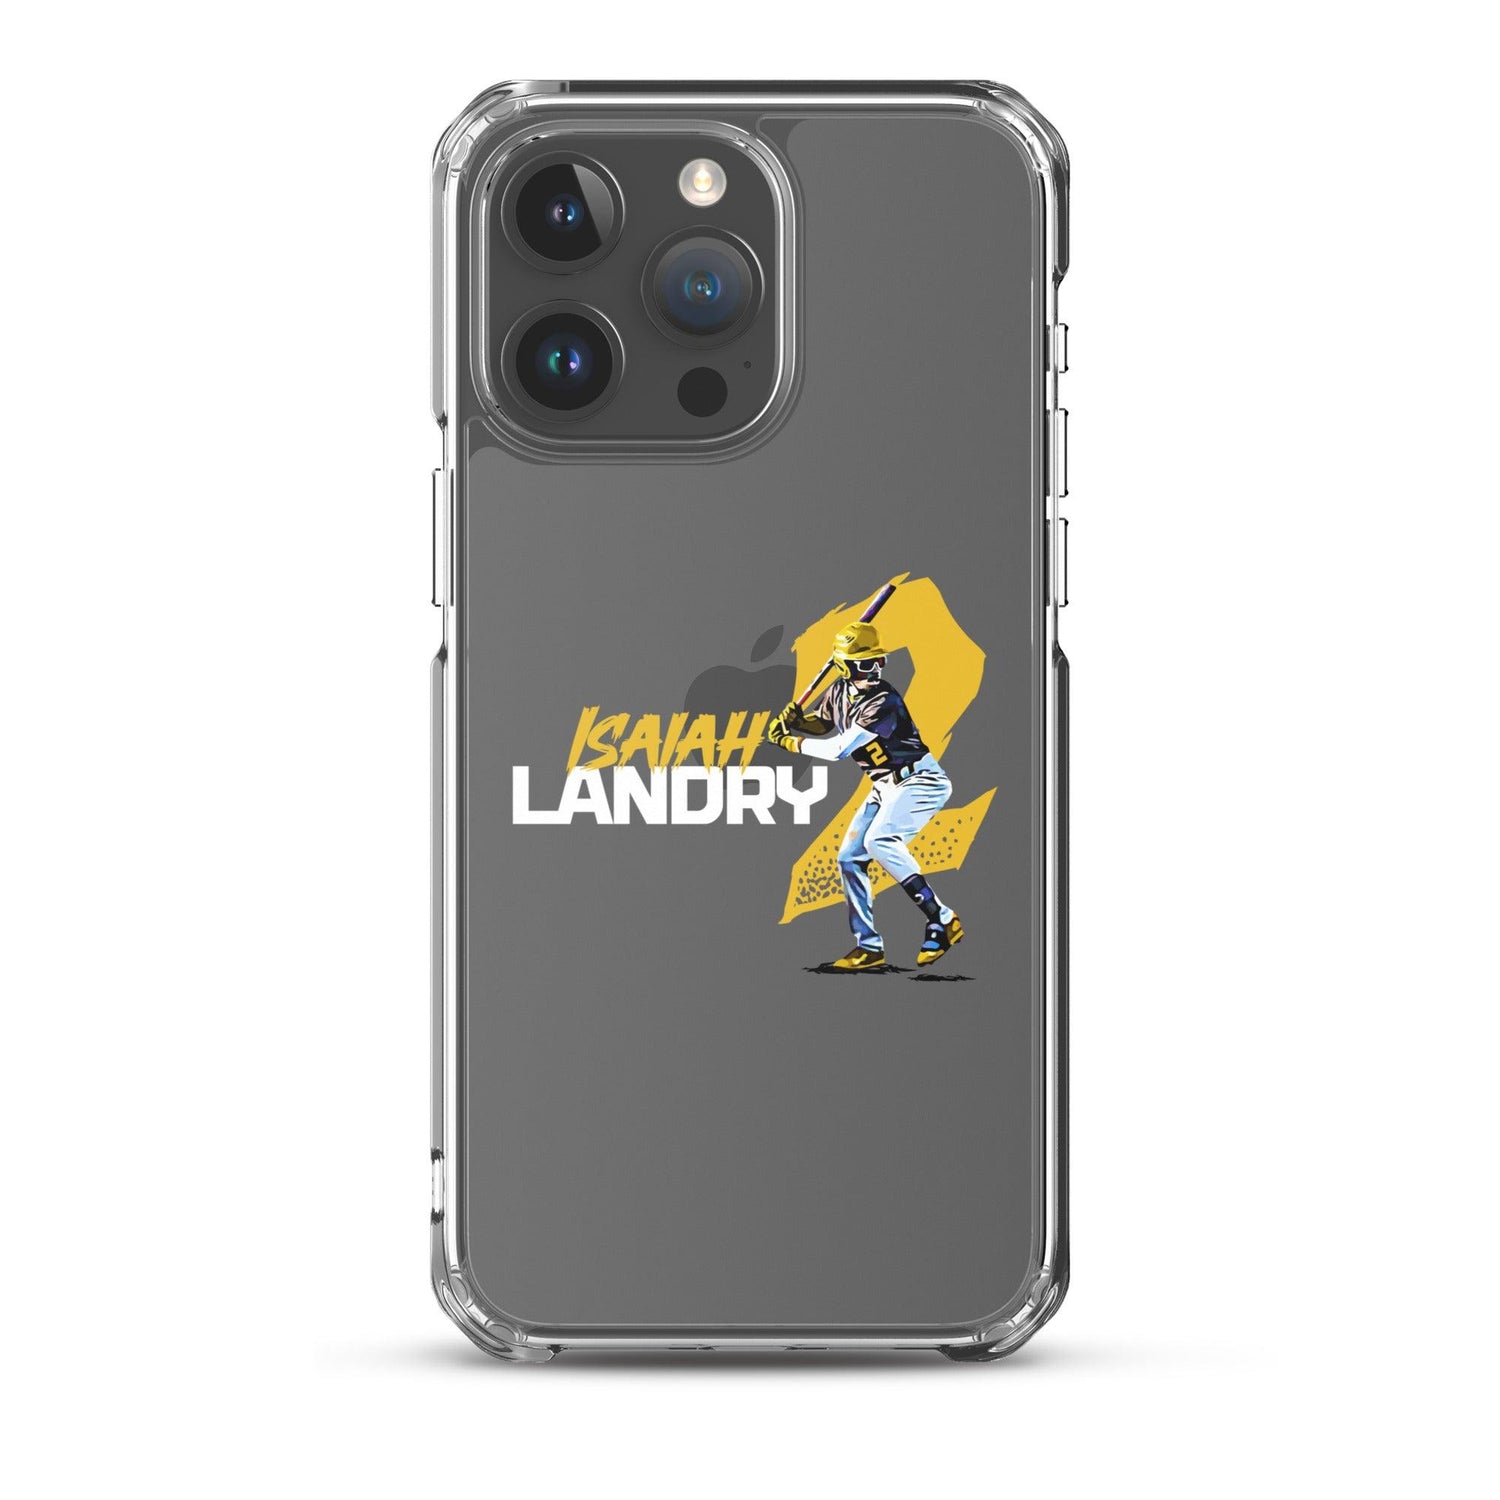 Isaiah Landry "Gameday" iPhone® - Fan Arch